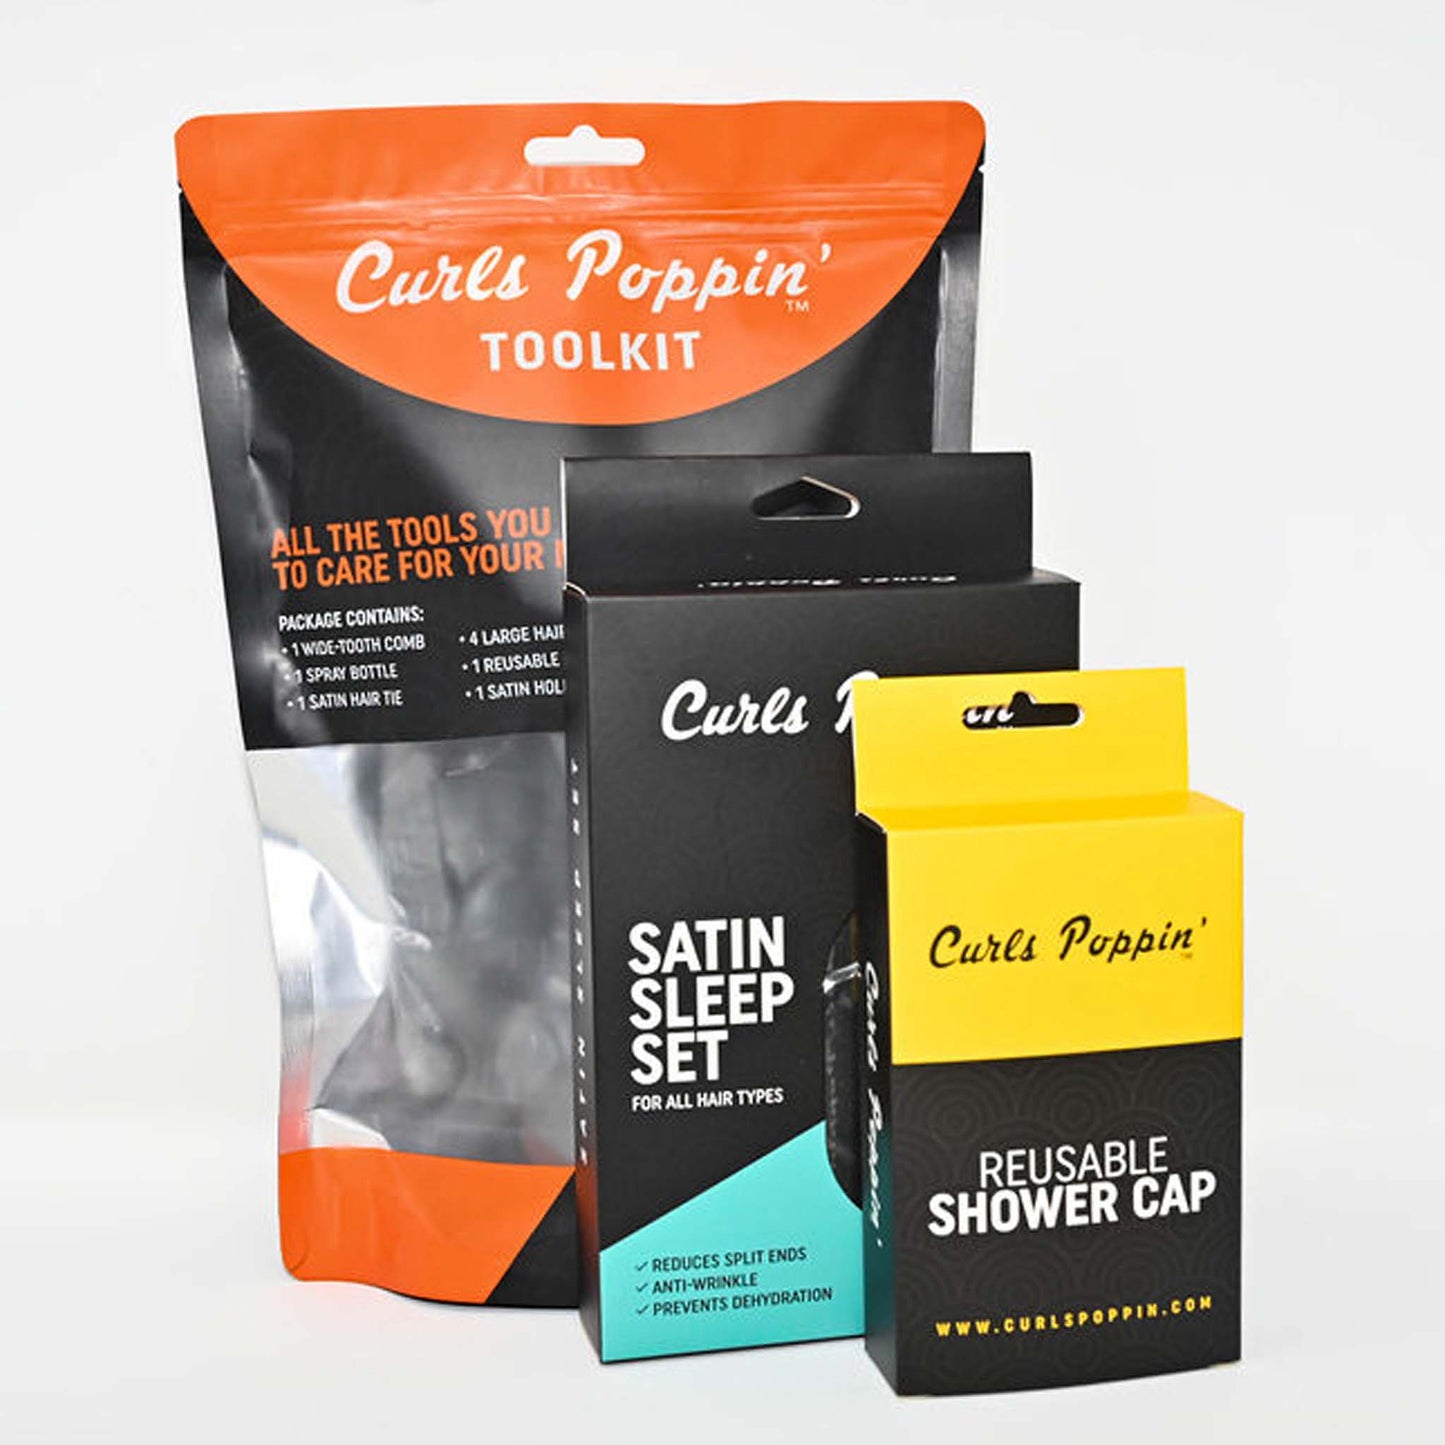 Curls Poppin Complete Curl Care Kit contains satin sleep set, reusable shower cap, etc.